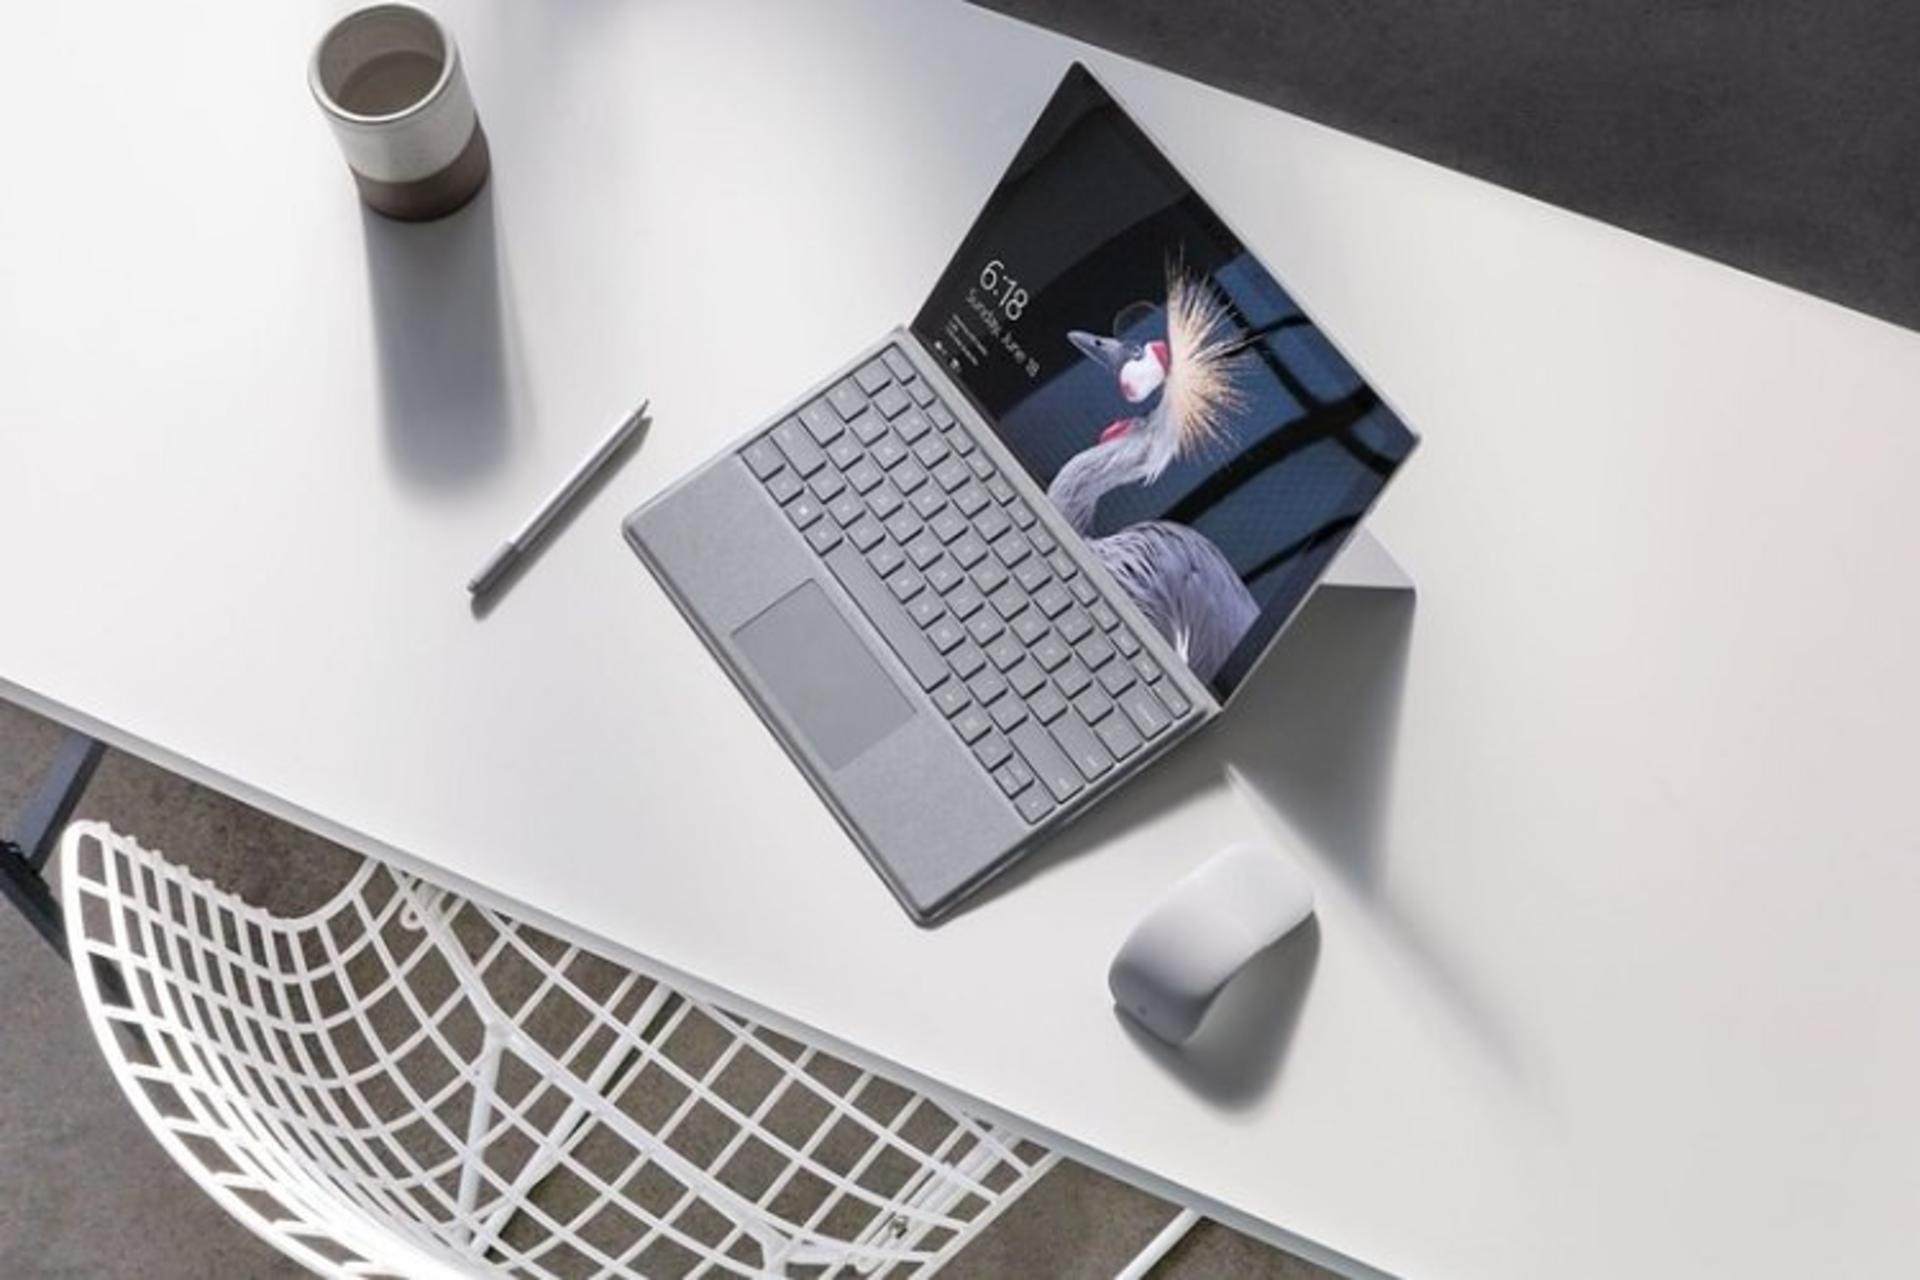 Surface Pro 2017